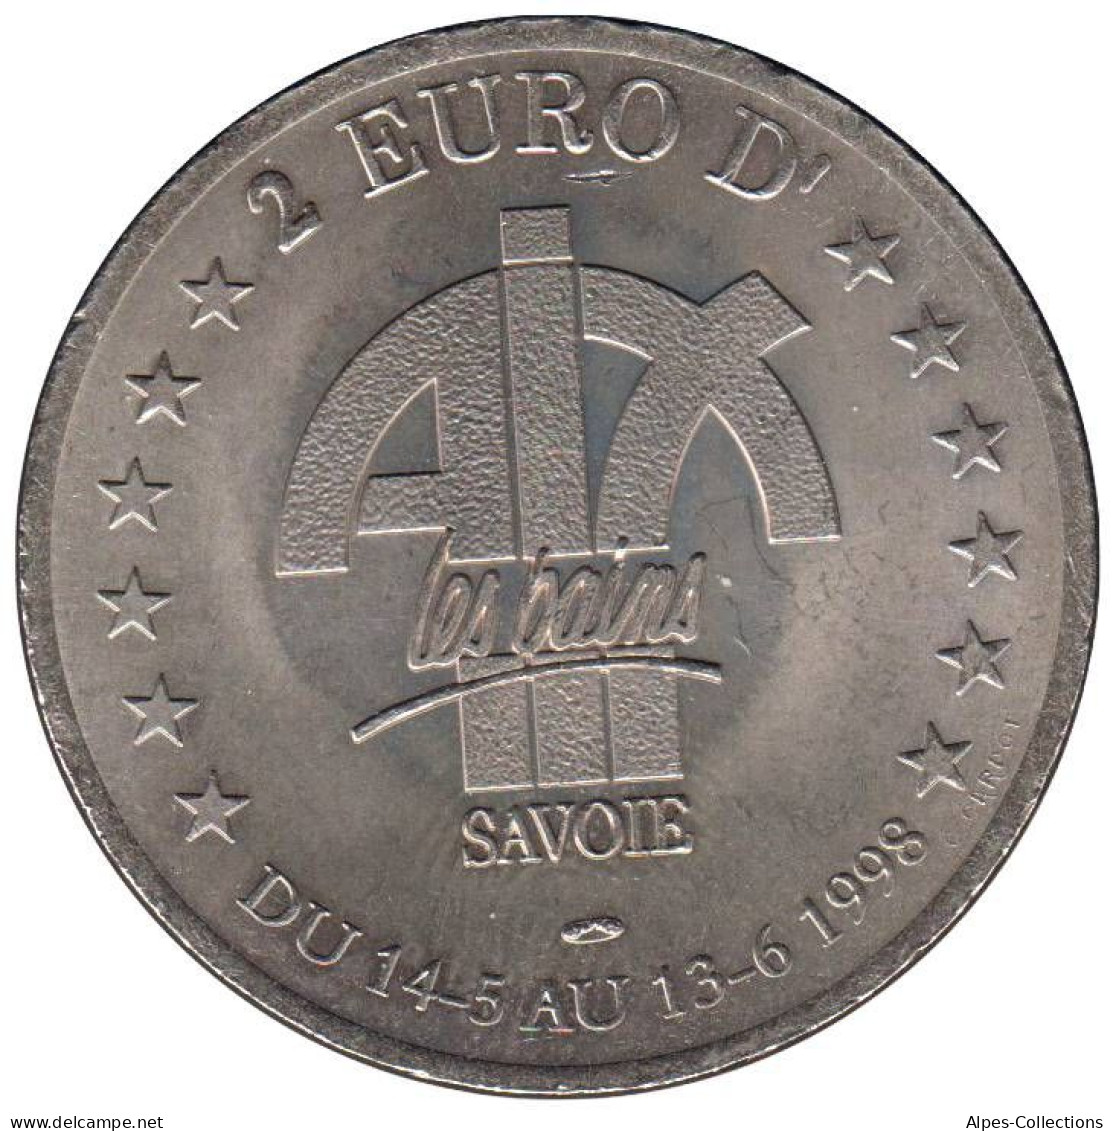 AIX LES BAINS - EU0020.3 - 2 EURO DES VILLES - Réf: T419 - 1998 - Euros Of The Cities